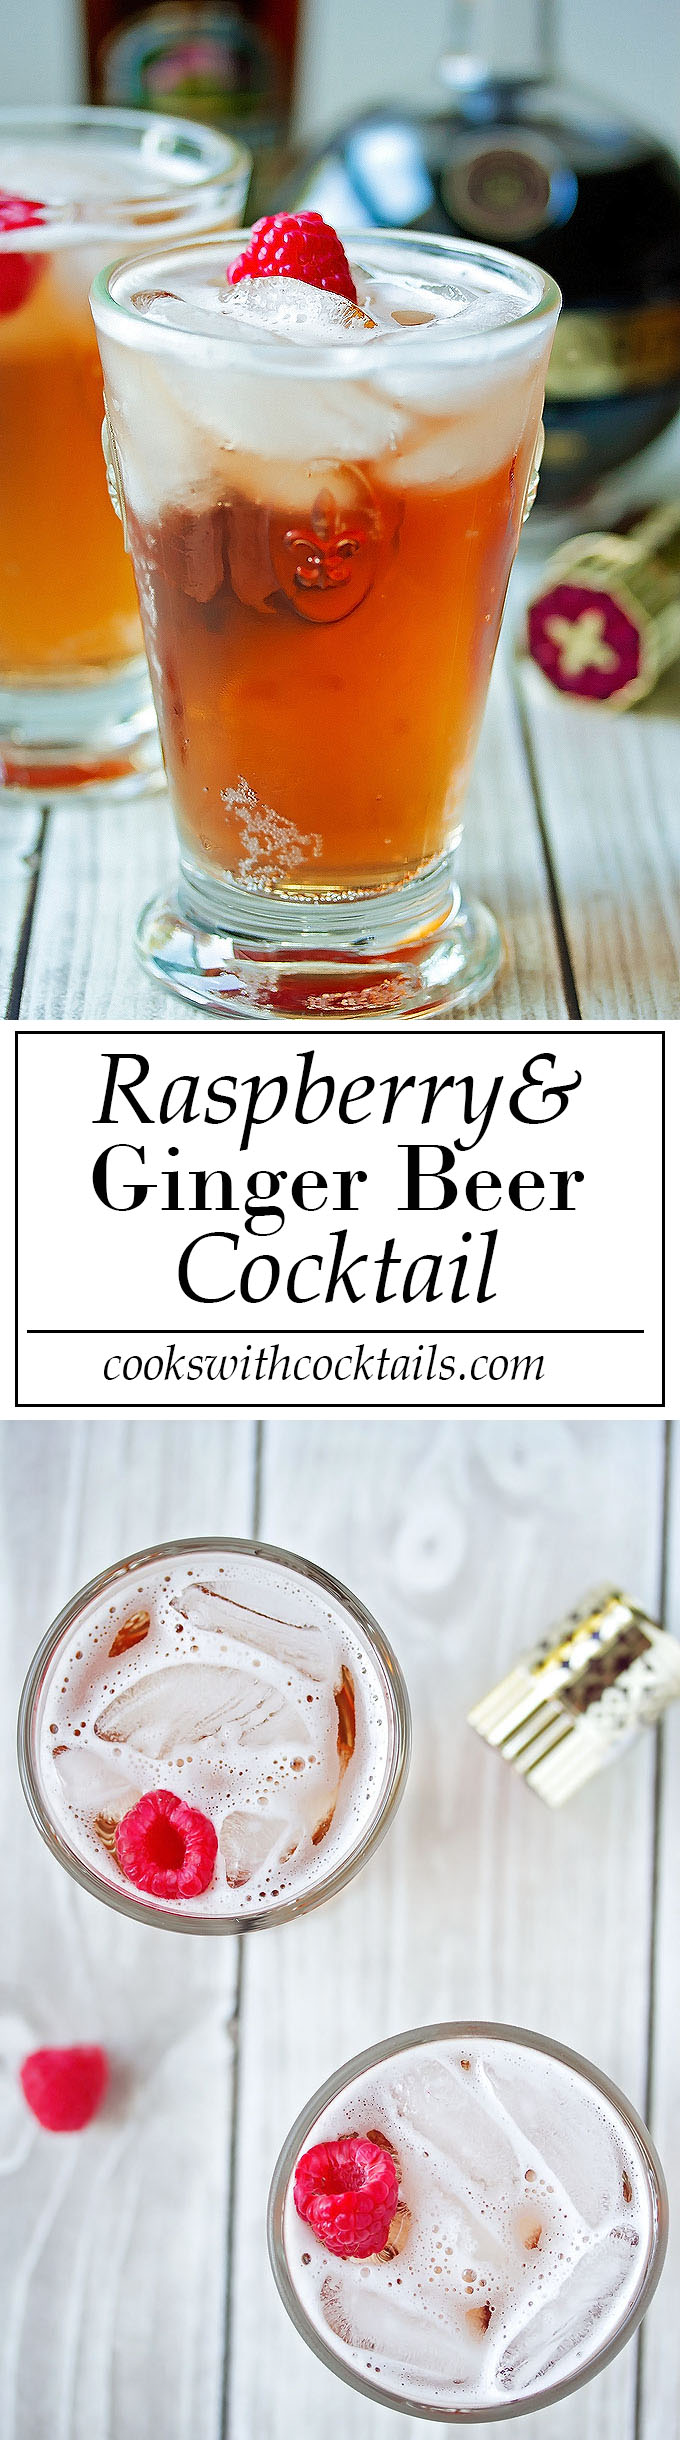 Rasberry & Ginger Beer Cocktail